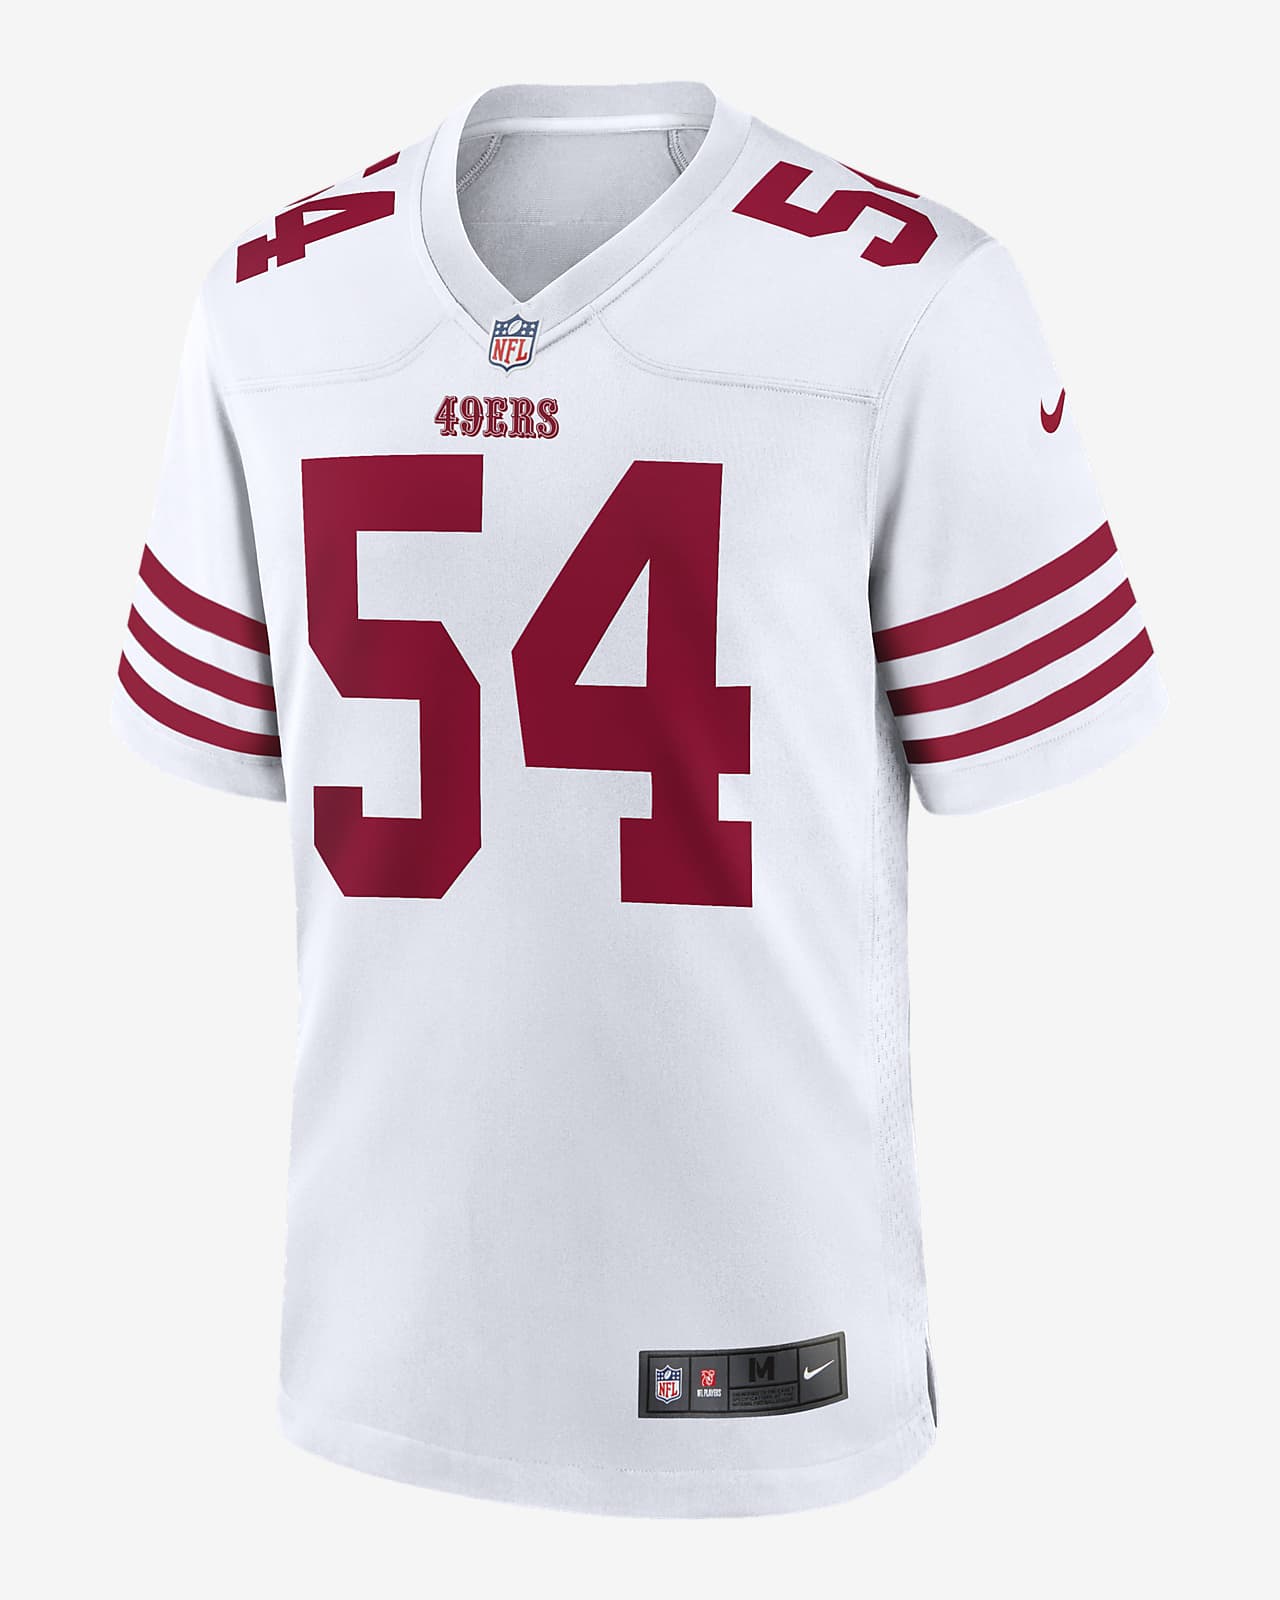 buy 49ers jersey near me